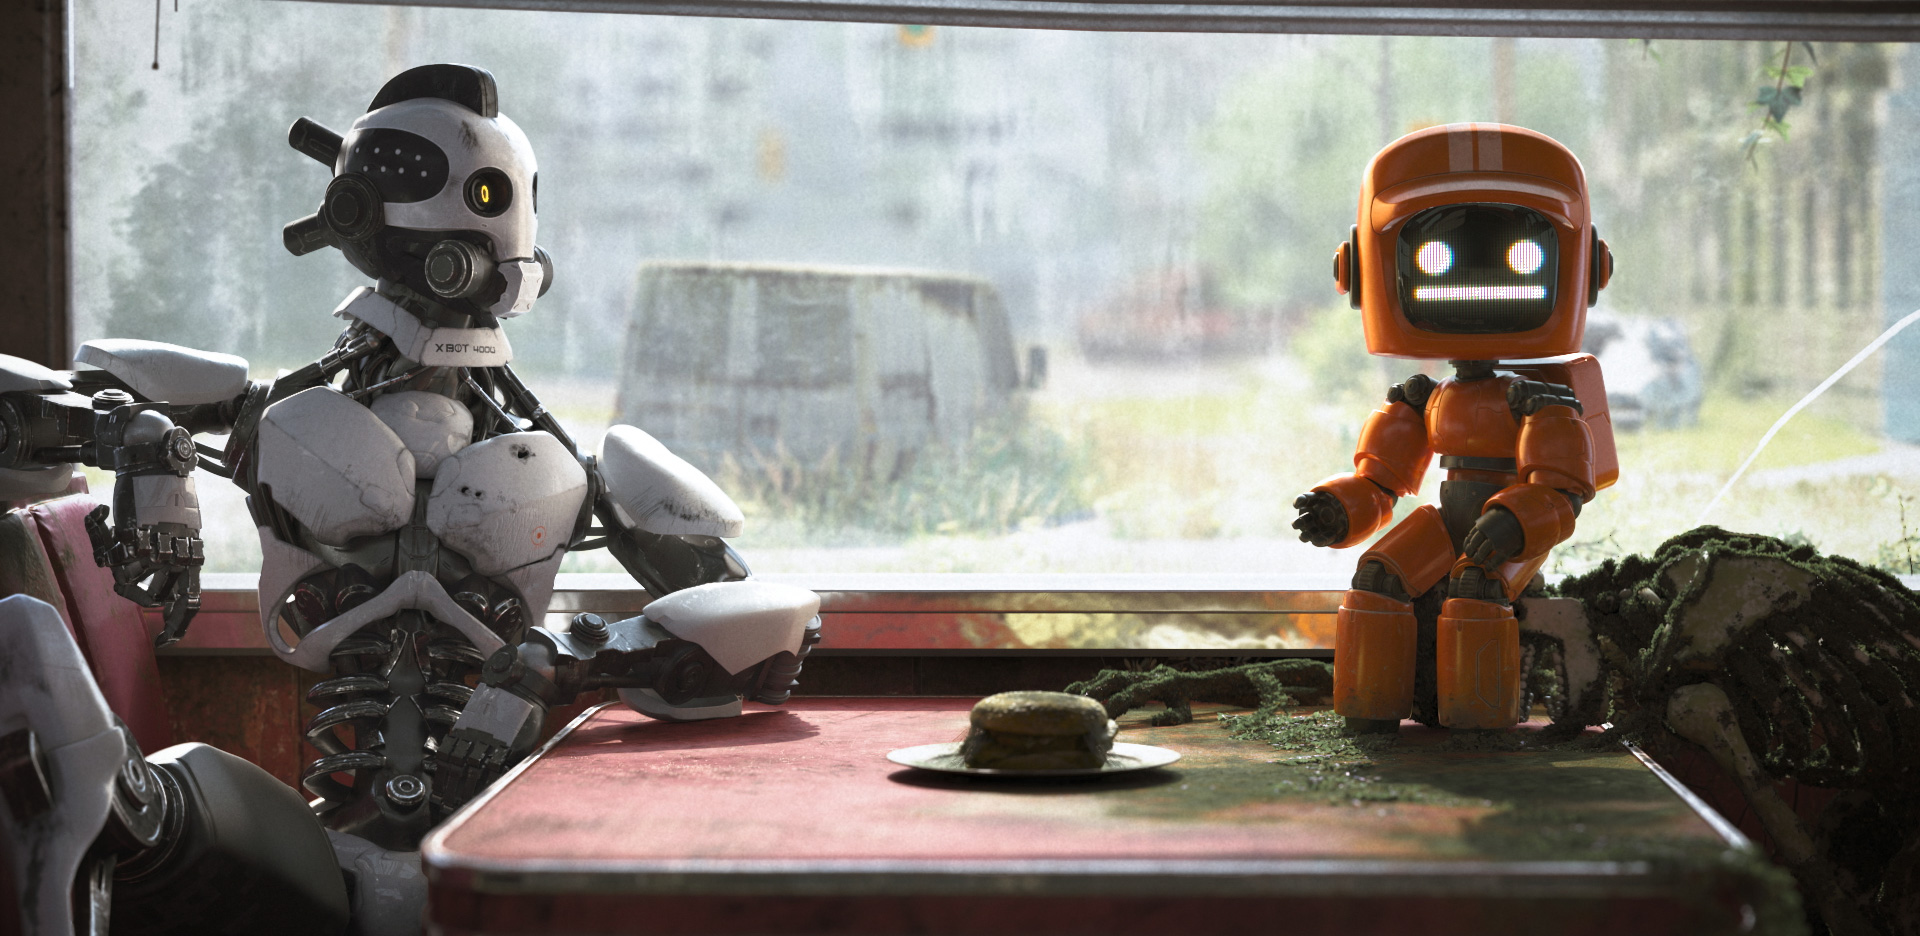 🍿 14 travnja na Netflix vyjde prodovžennja serialu Love, Death & Robots